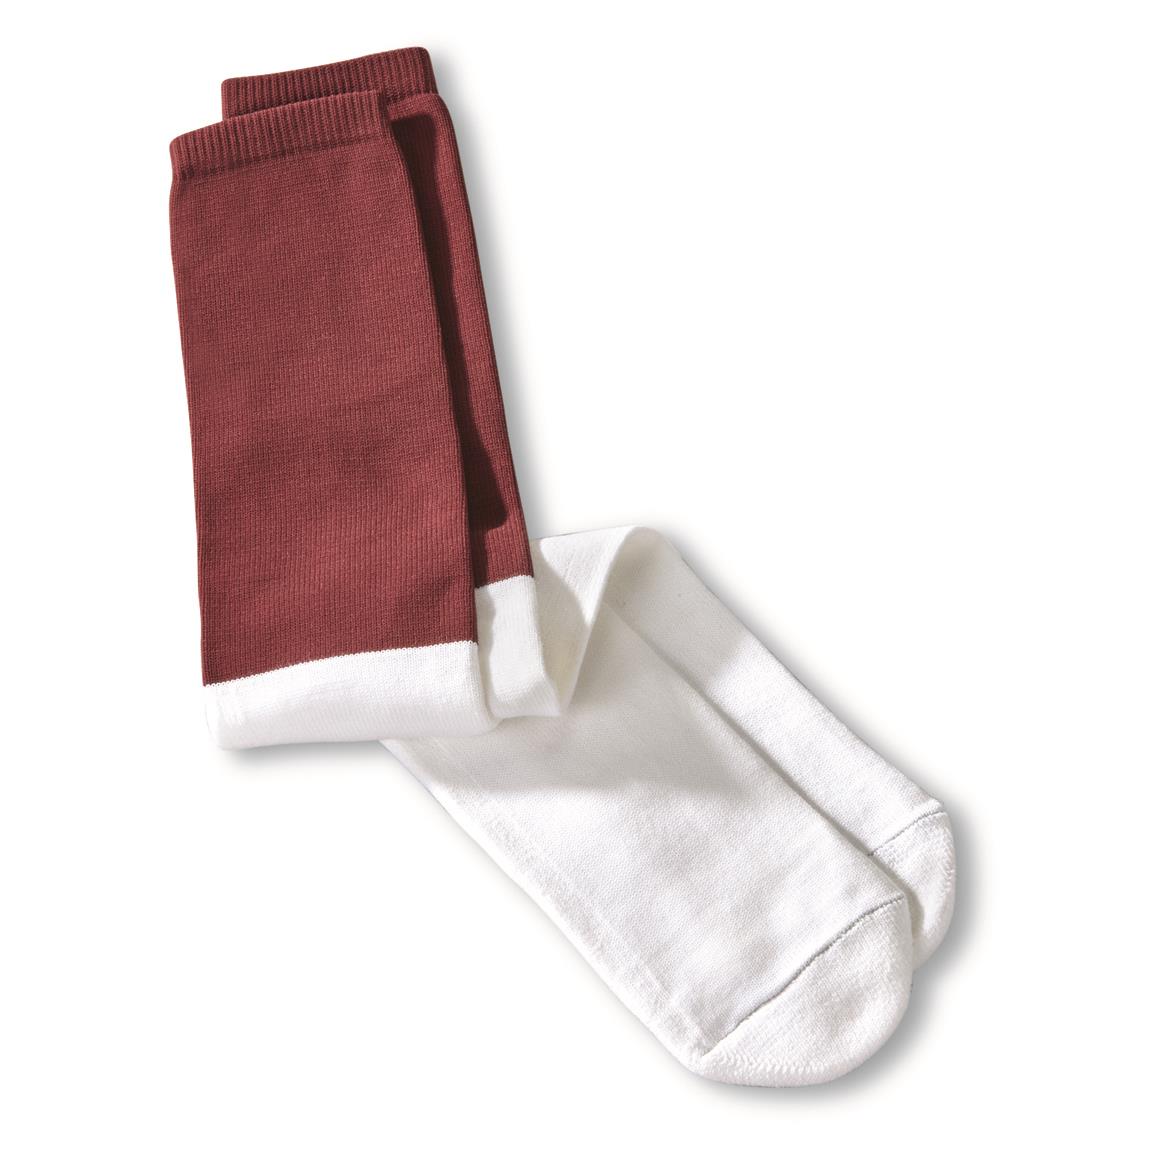 U.S. Municipal Surplus Russell Athletic OTC Socks, 12 Pack, New, White/Red